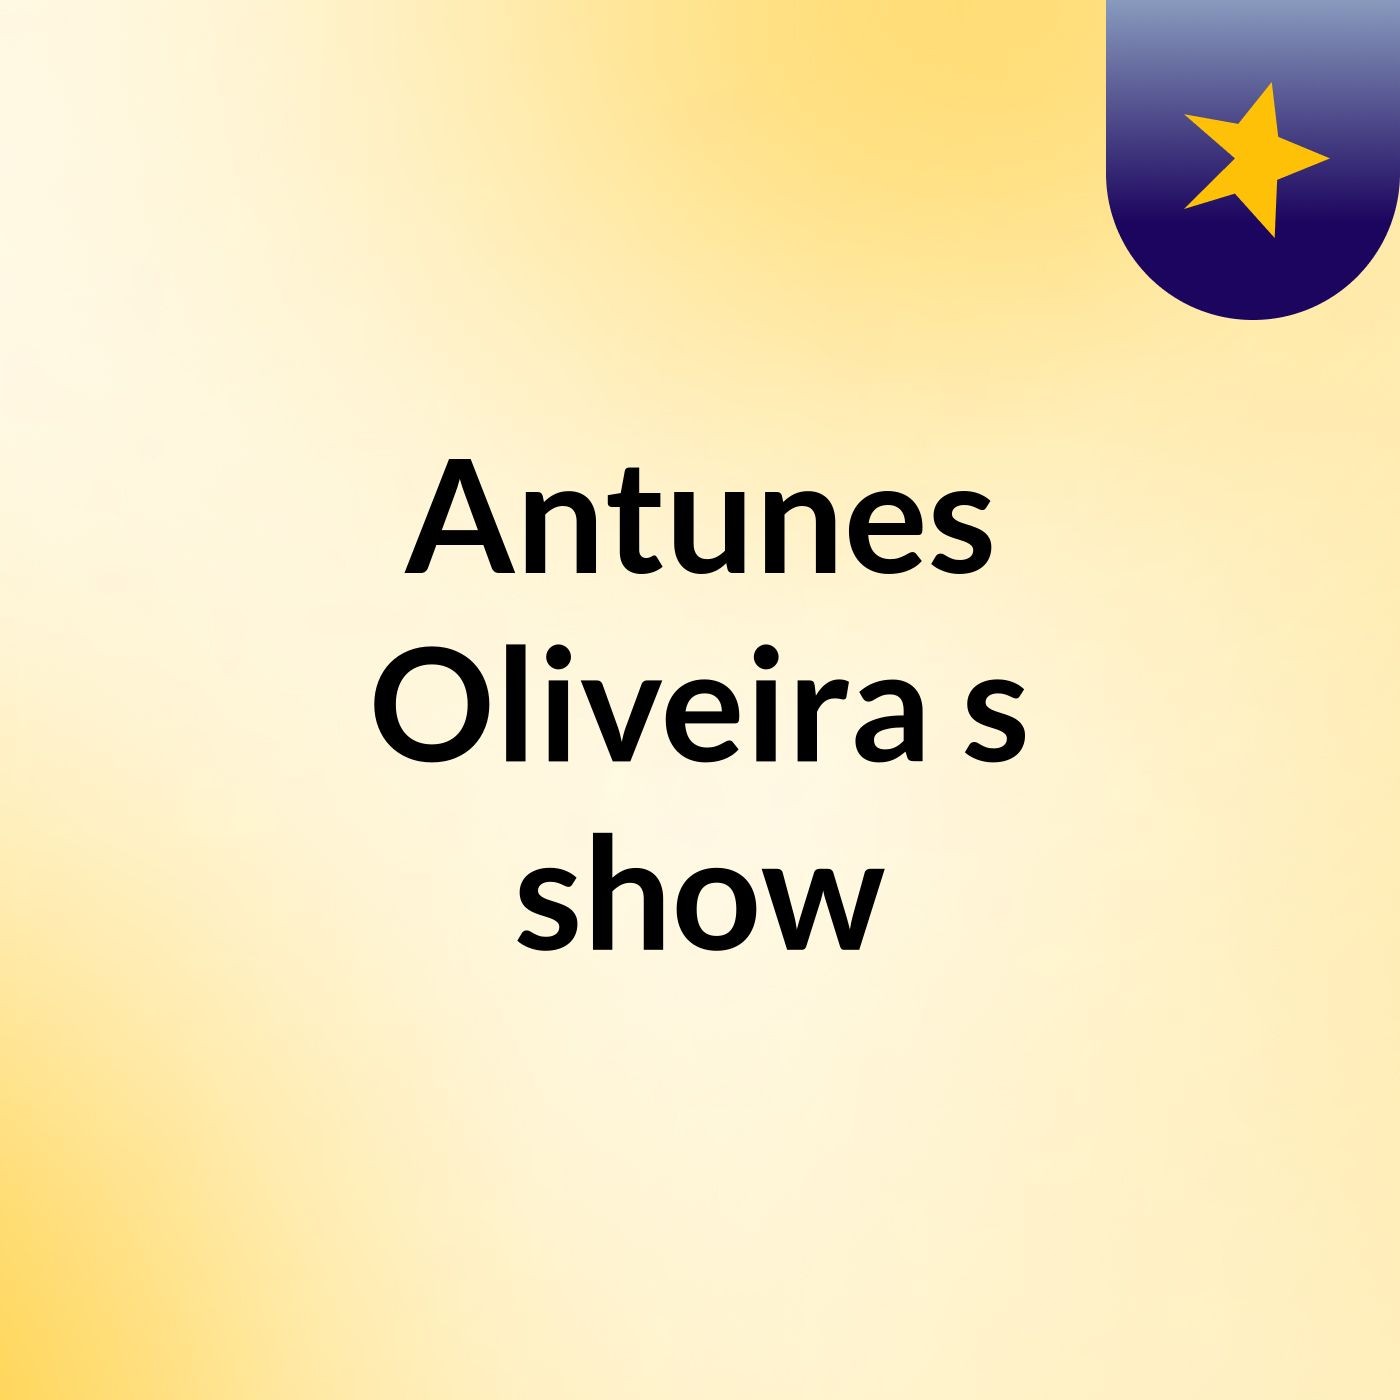 Antunes Oliveira's show